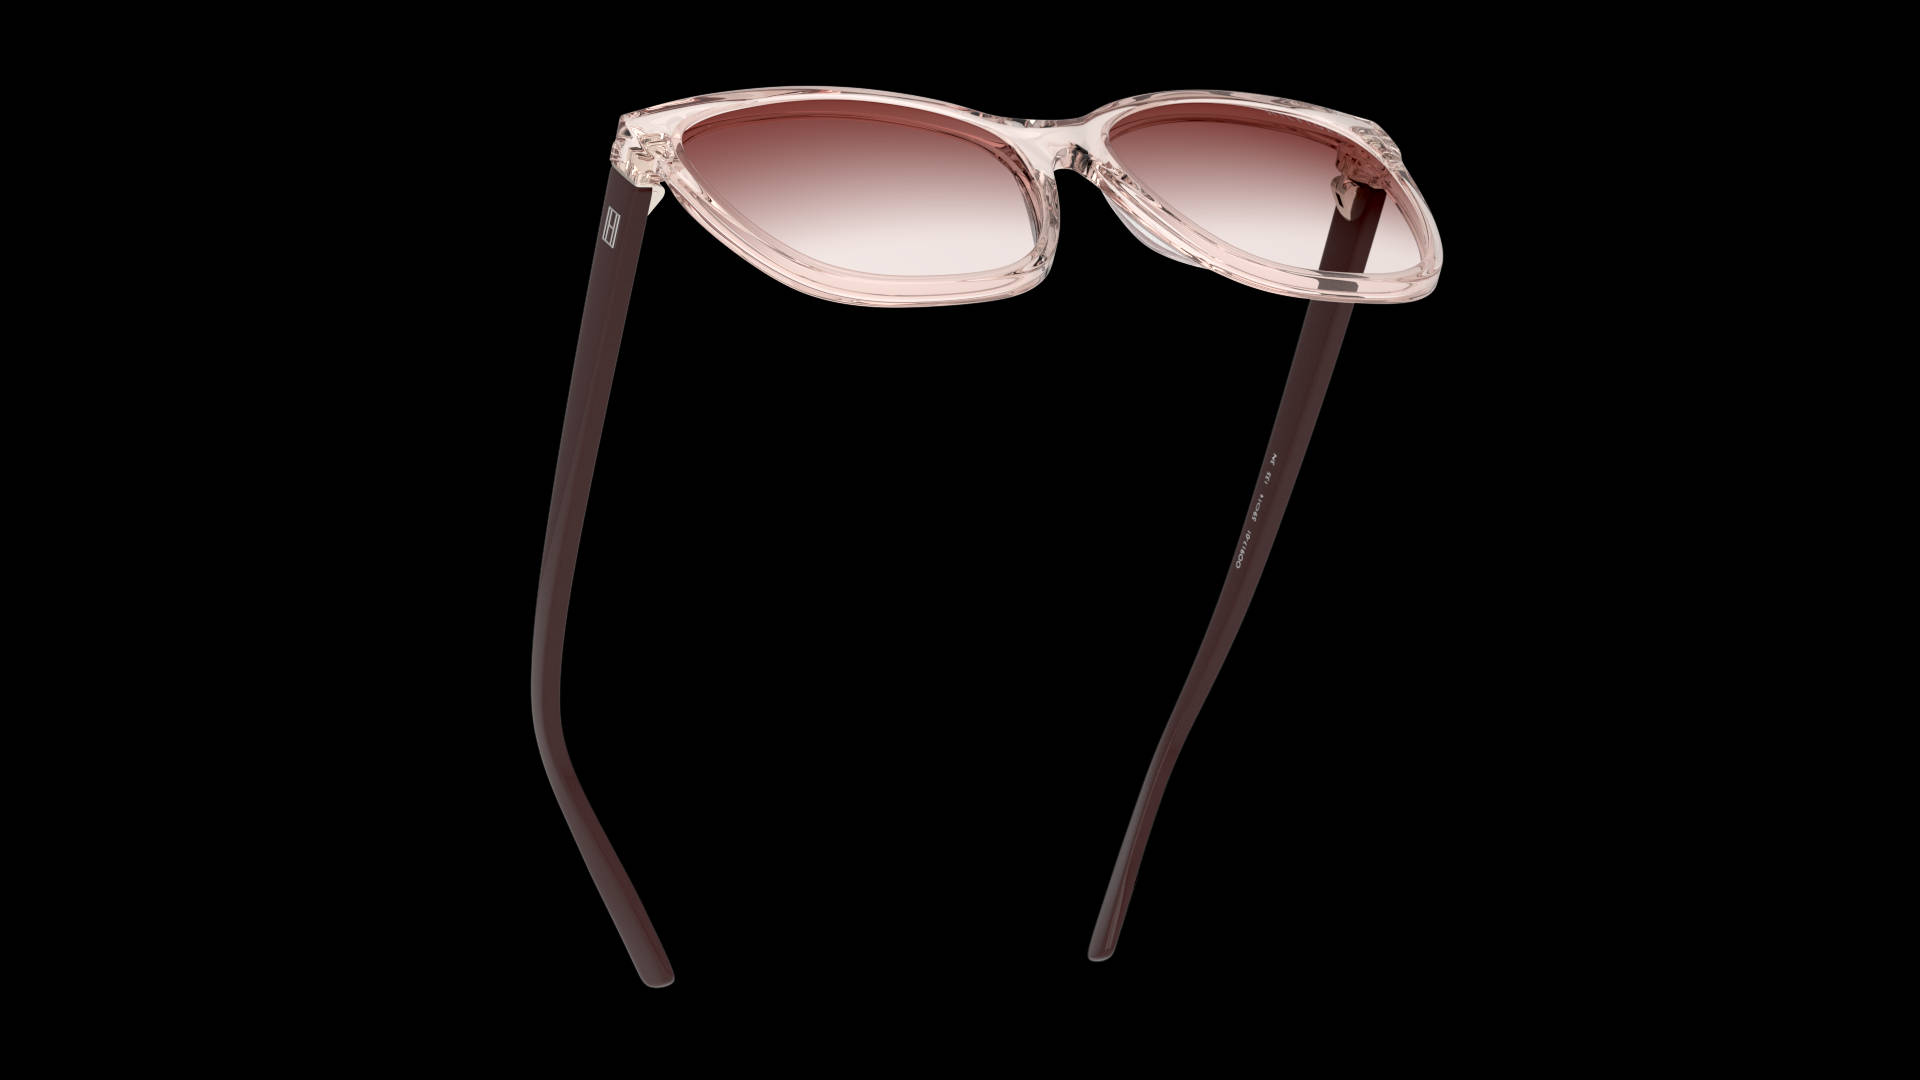 Tommy Hilfiger Pink Sunglasses Wallpaper